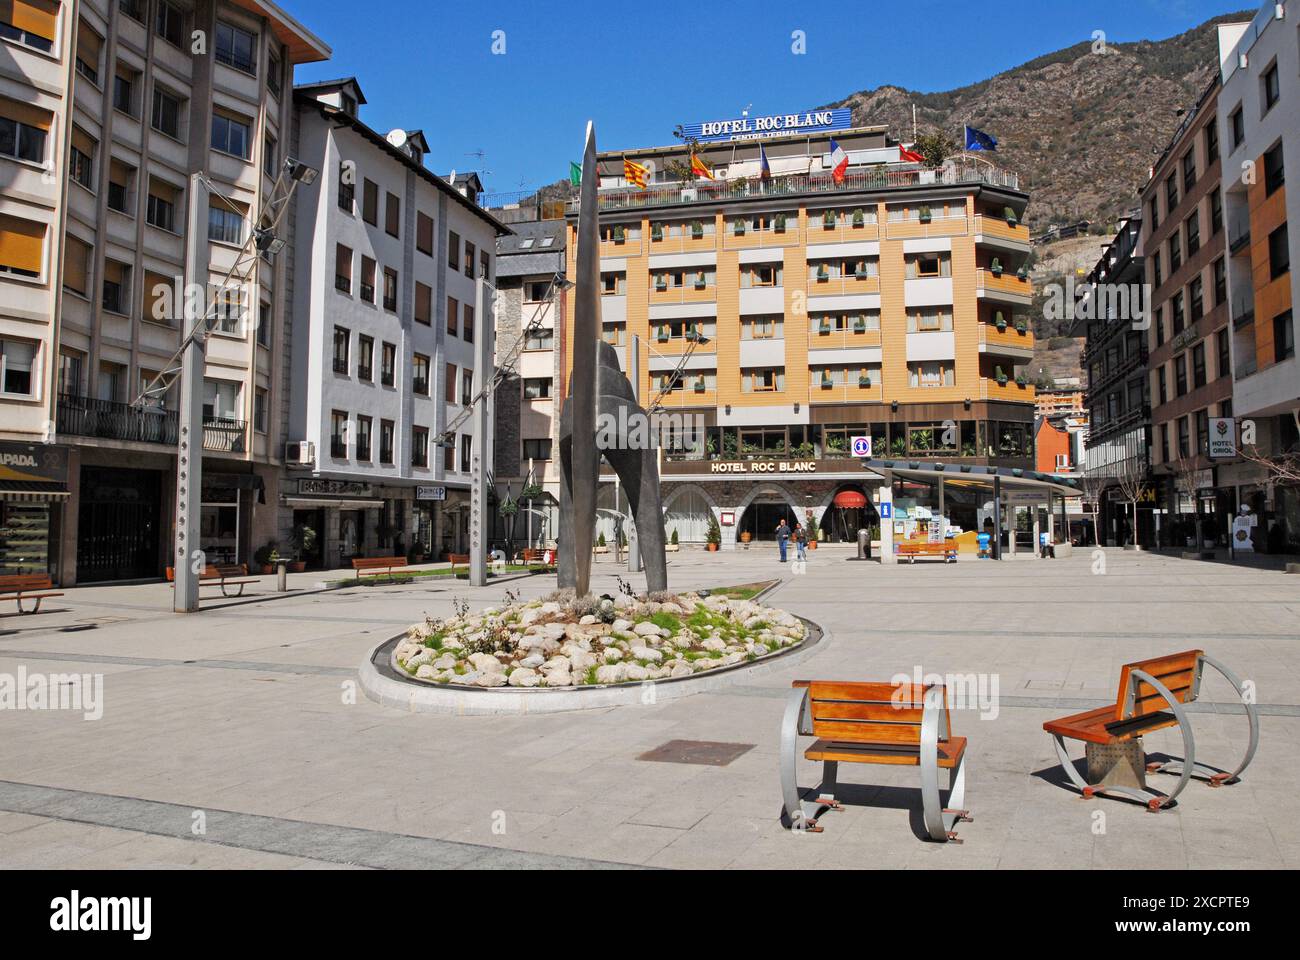 PPL-FOTOBIBLIOTHEK - COPYRIGHT VORBEHALTEN Andorra La Vella, Andorra FOTO: Ivan Catterwell/PPL Tel; +44(0)1243 555561 E-Mail: ppl@mistral.co.uk We Stockfoto